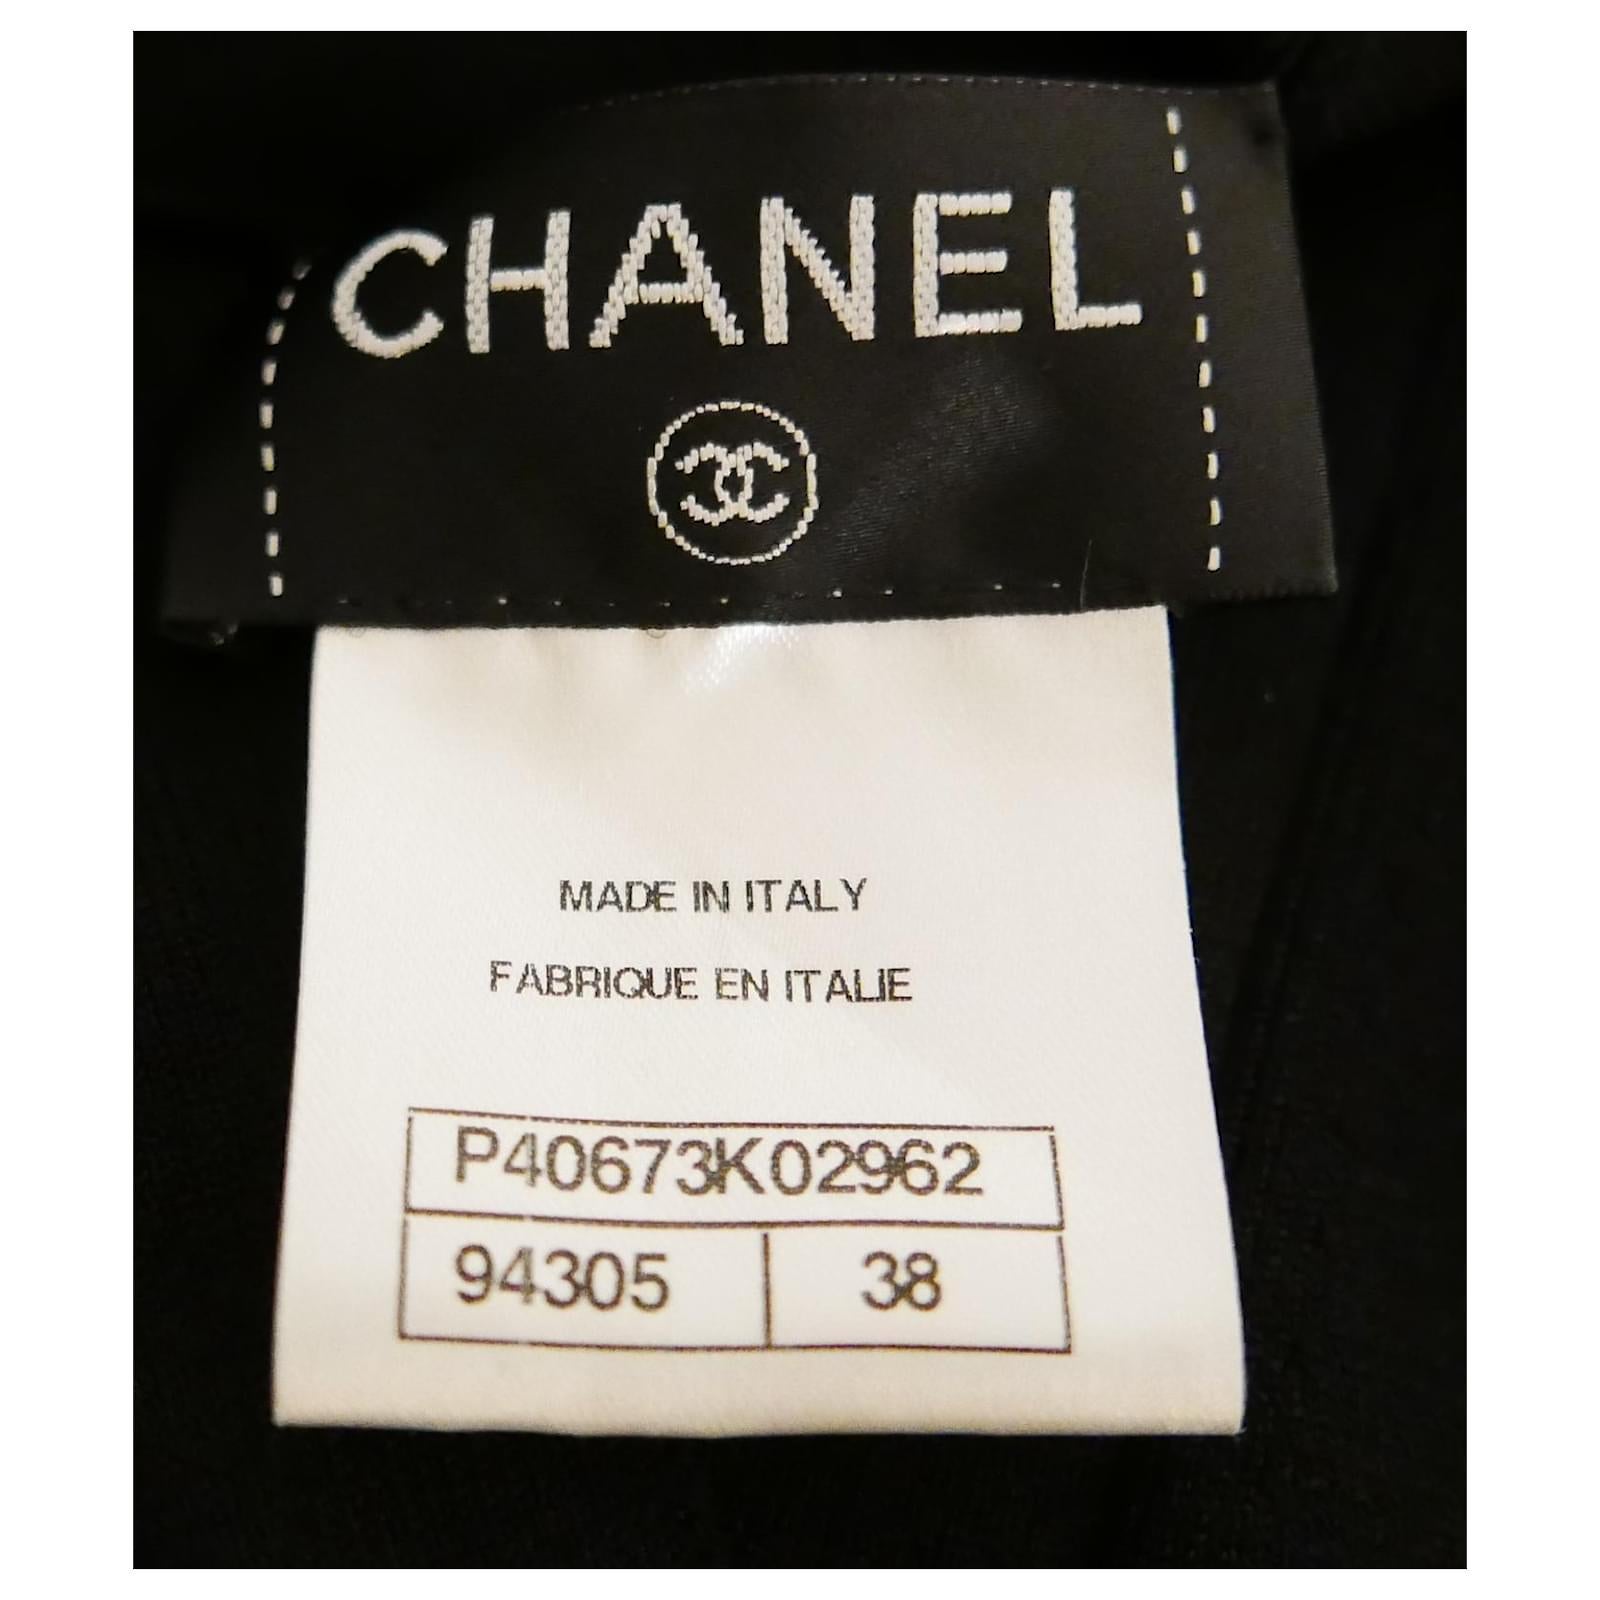 Chanel Resort 2011 - Manteau en maille - Veste noire en vente 1